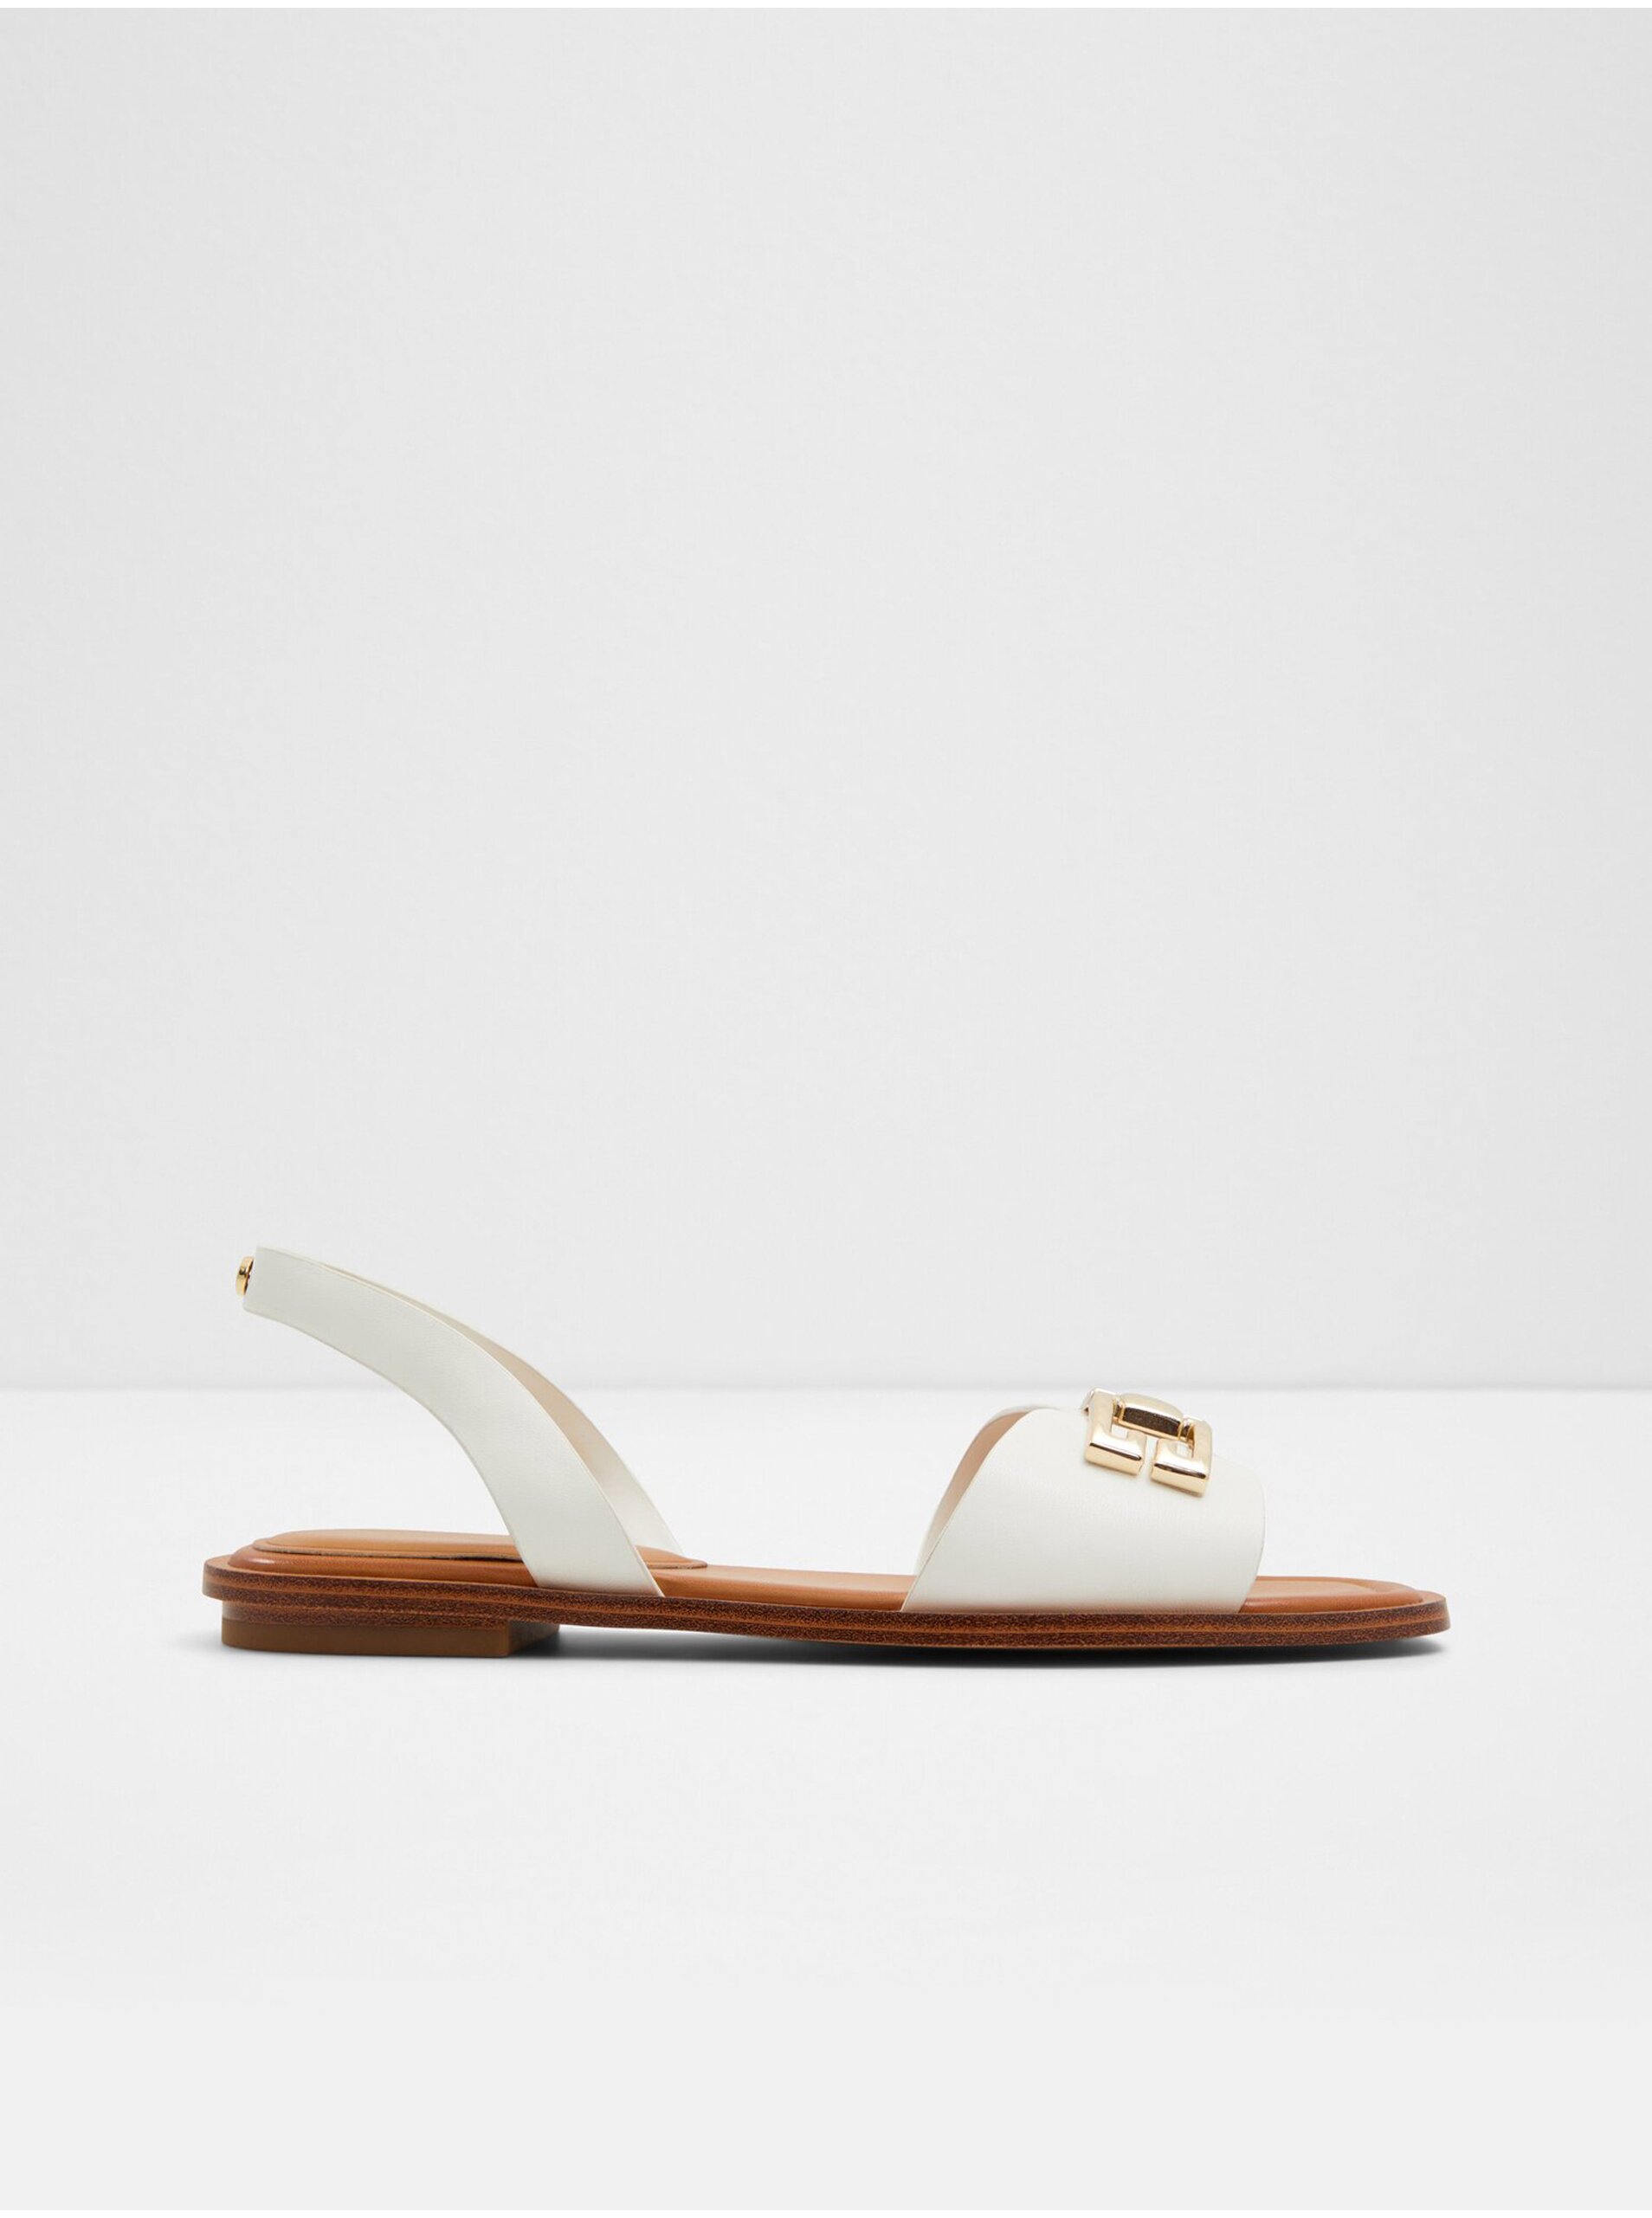 Lacno Biele dámske sandále ALDO Agreinwan